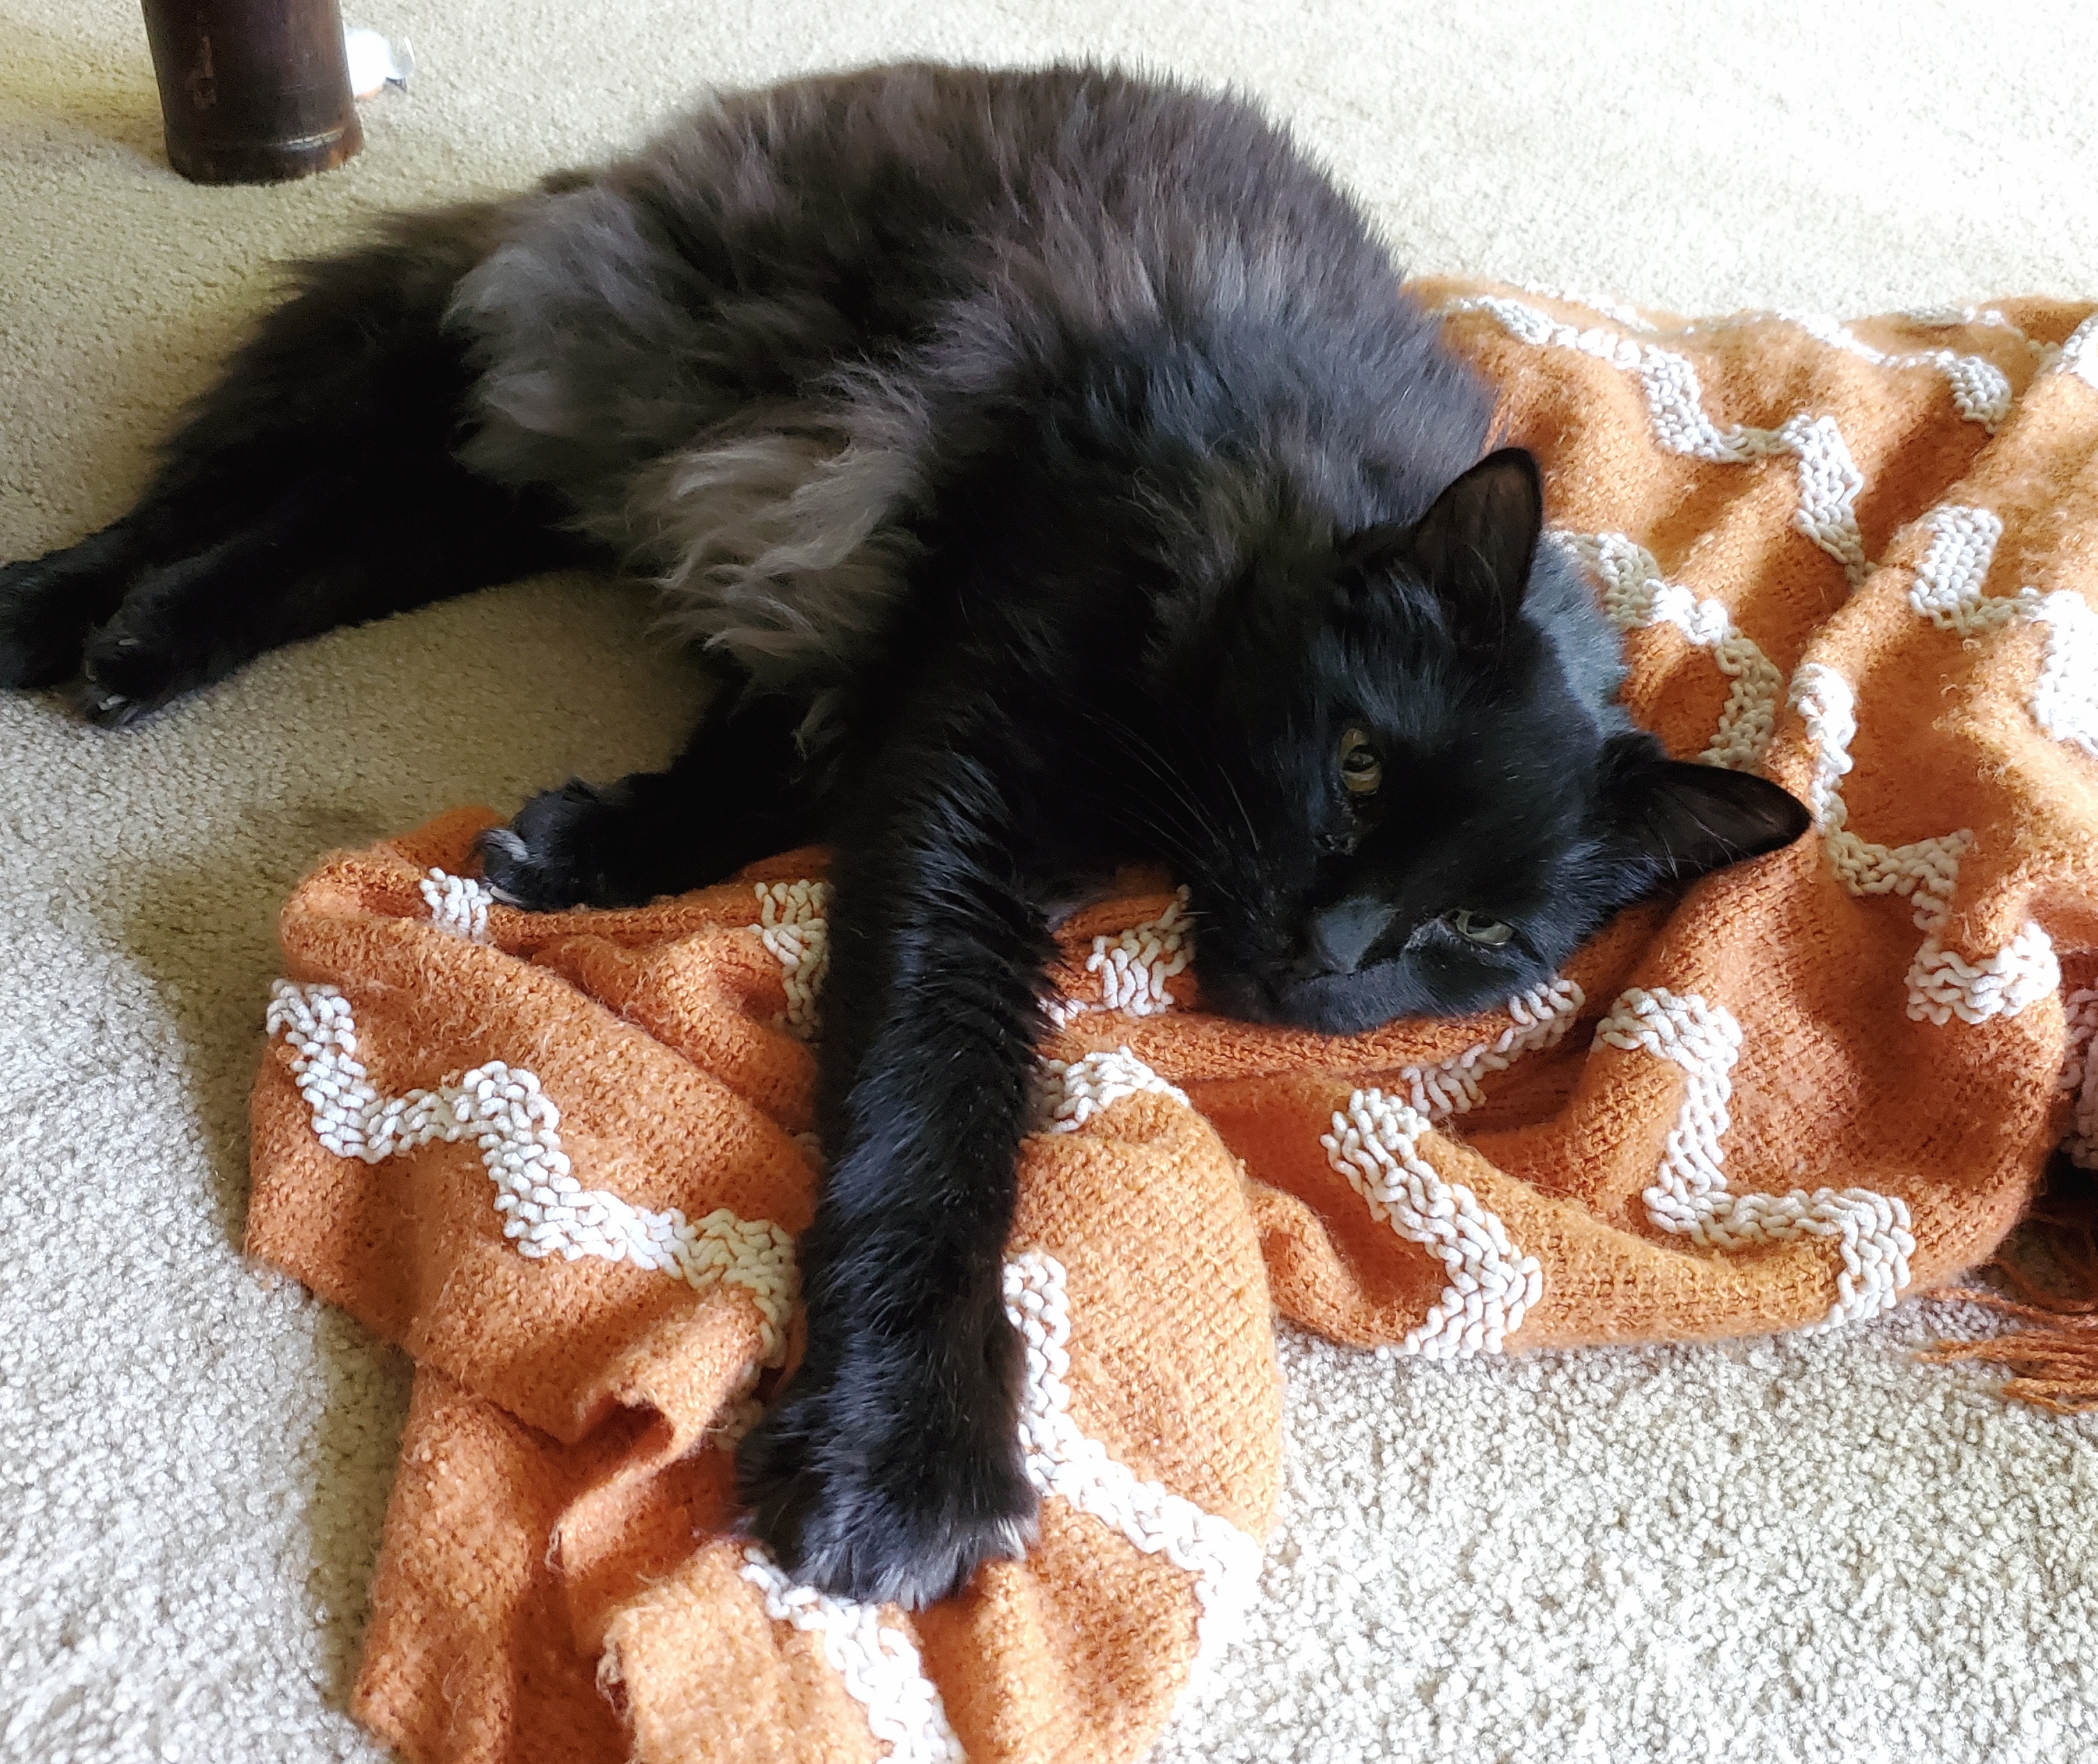 Sir Benson and his favorite orange blanket